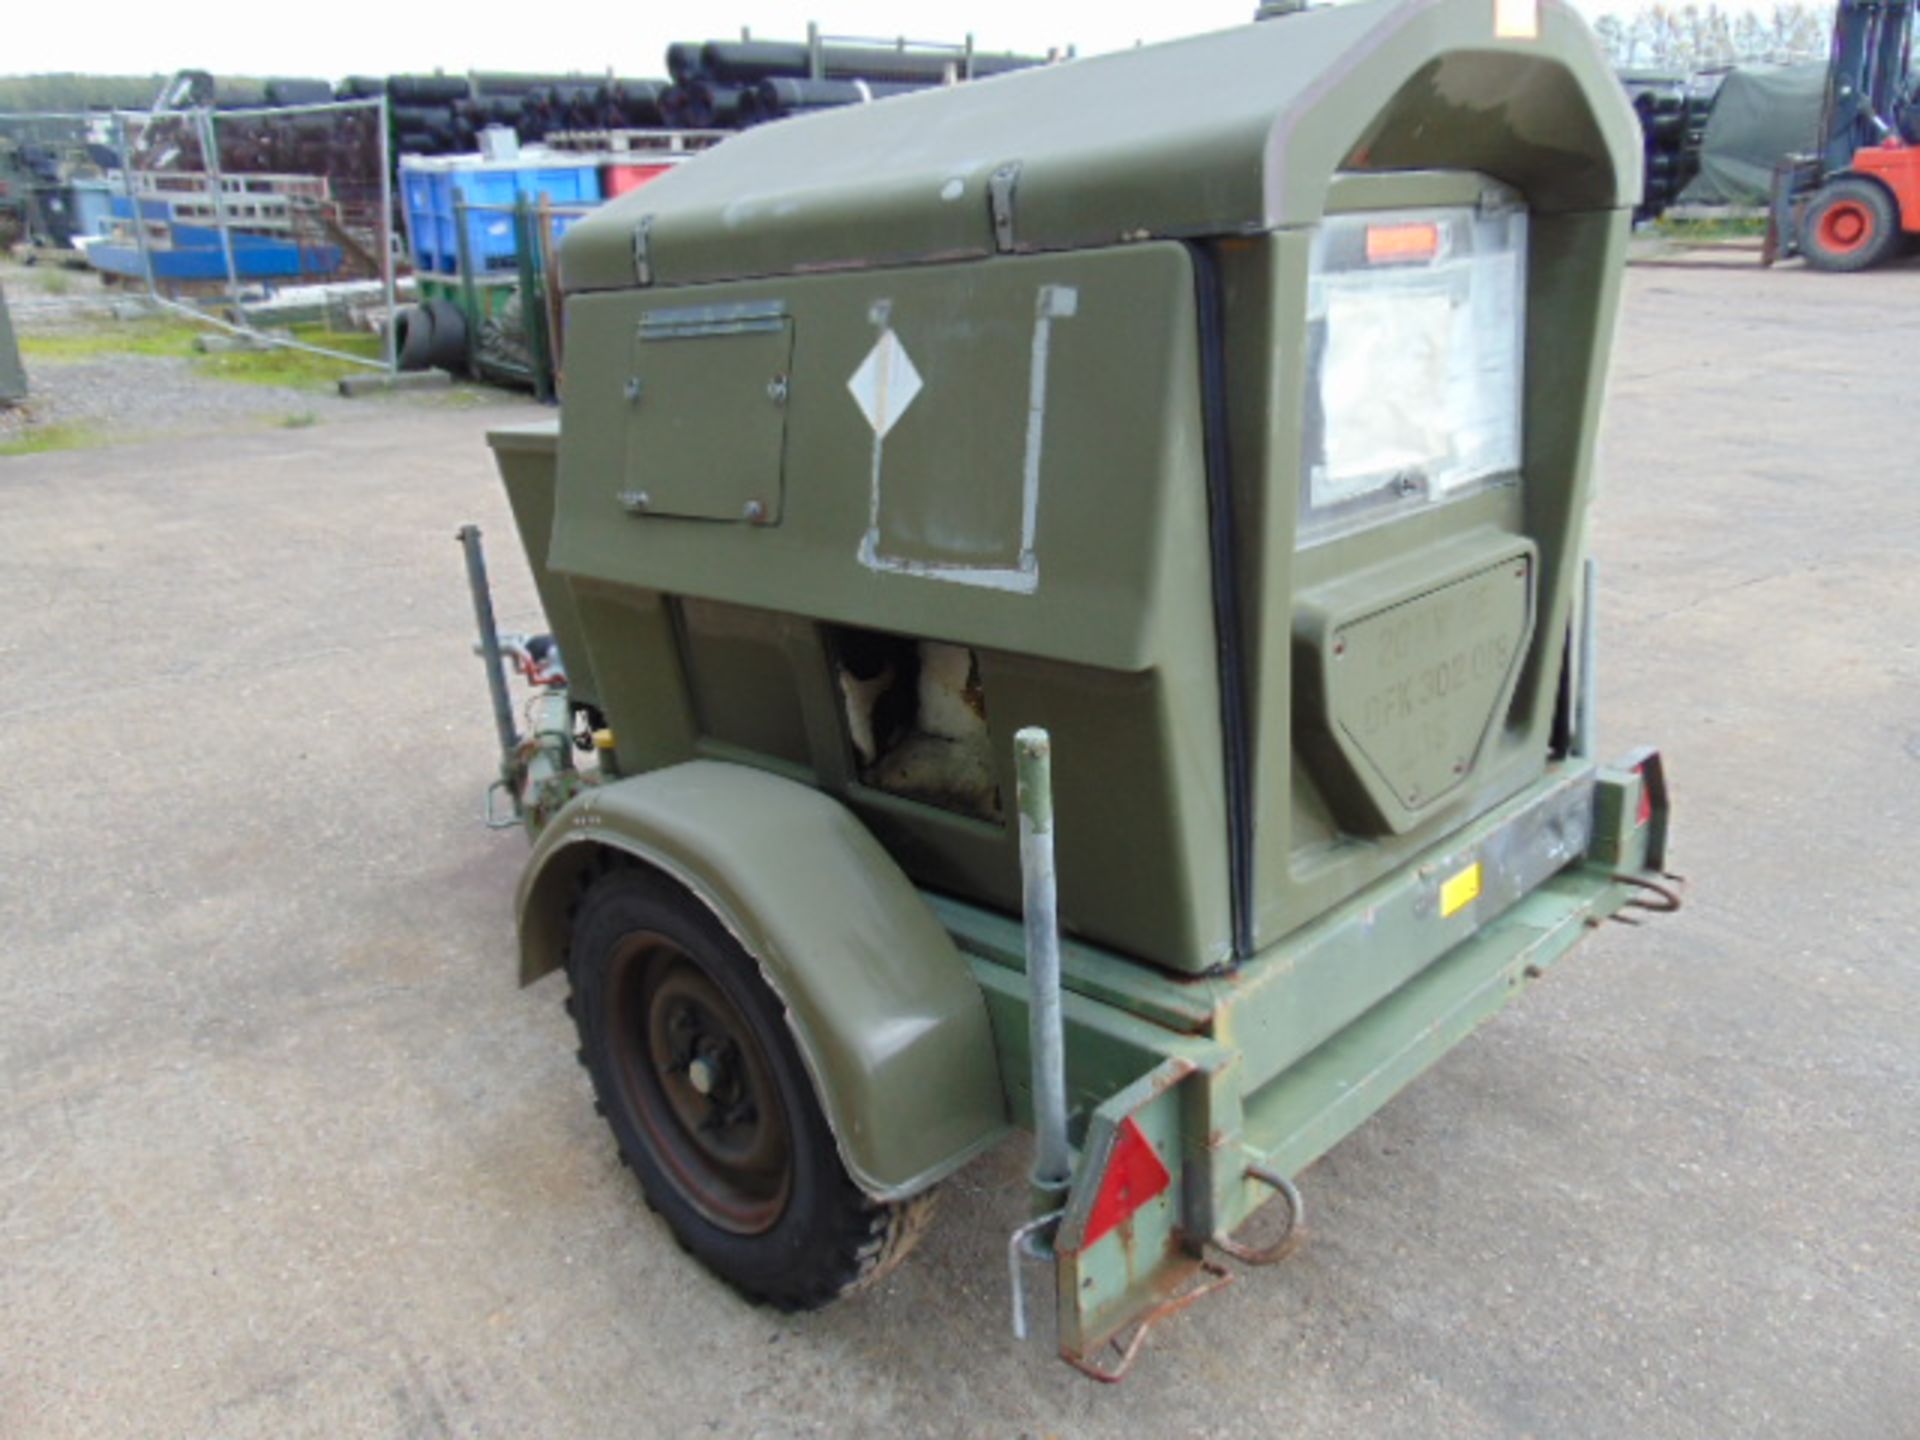 Ex Uk Royal Air Force Trailer Mounted 25 KVA Generator - Image 5 of 20